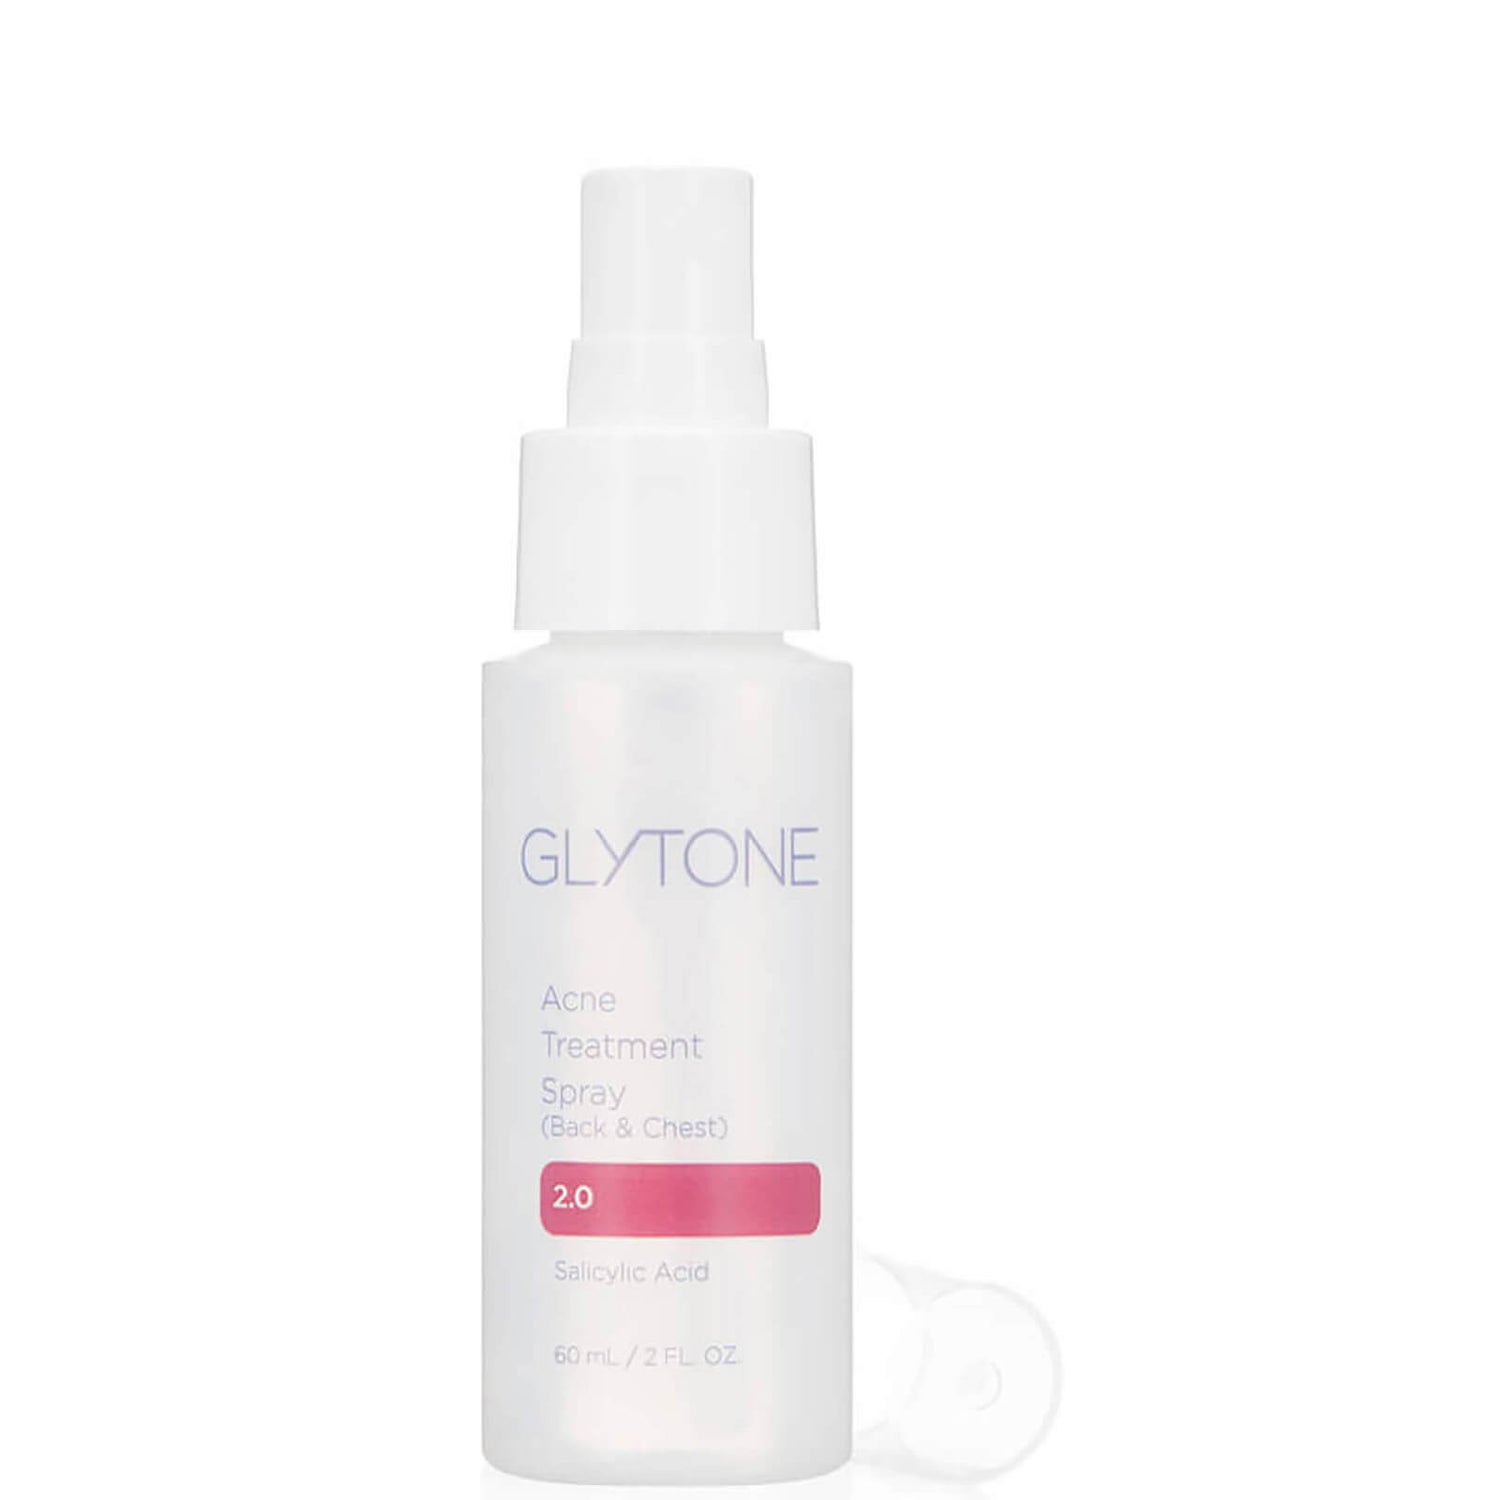 Glytone Acne Treatment Spray - Back and Chest (2 fl. oz.)